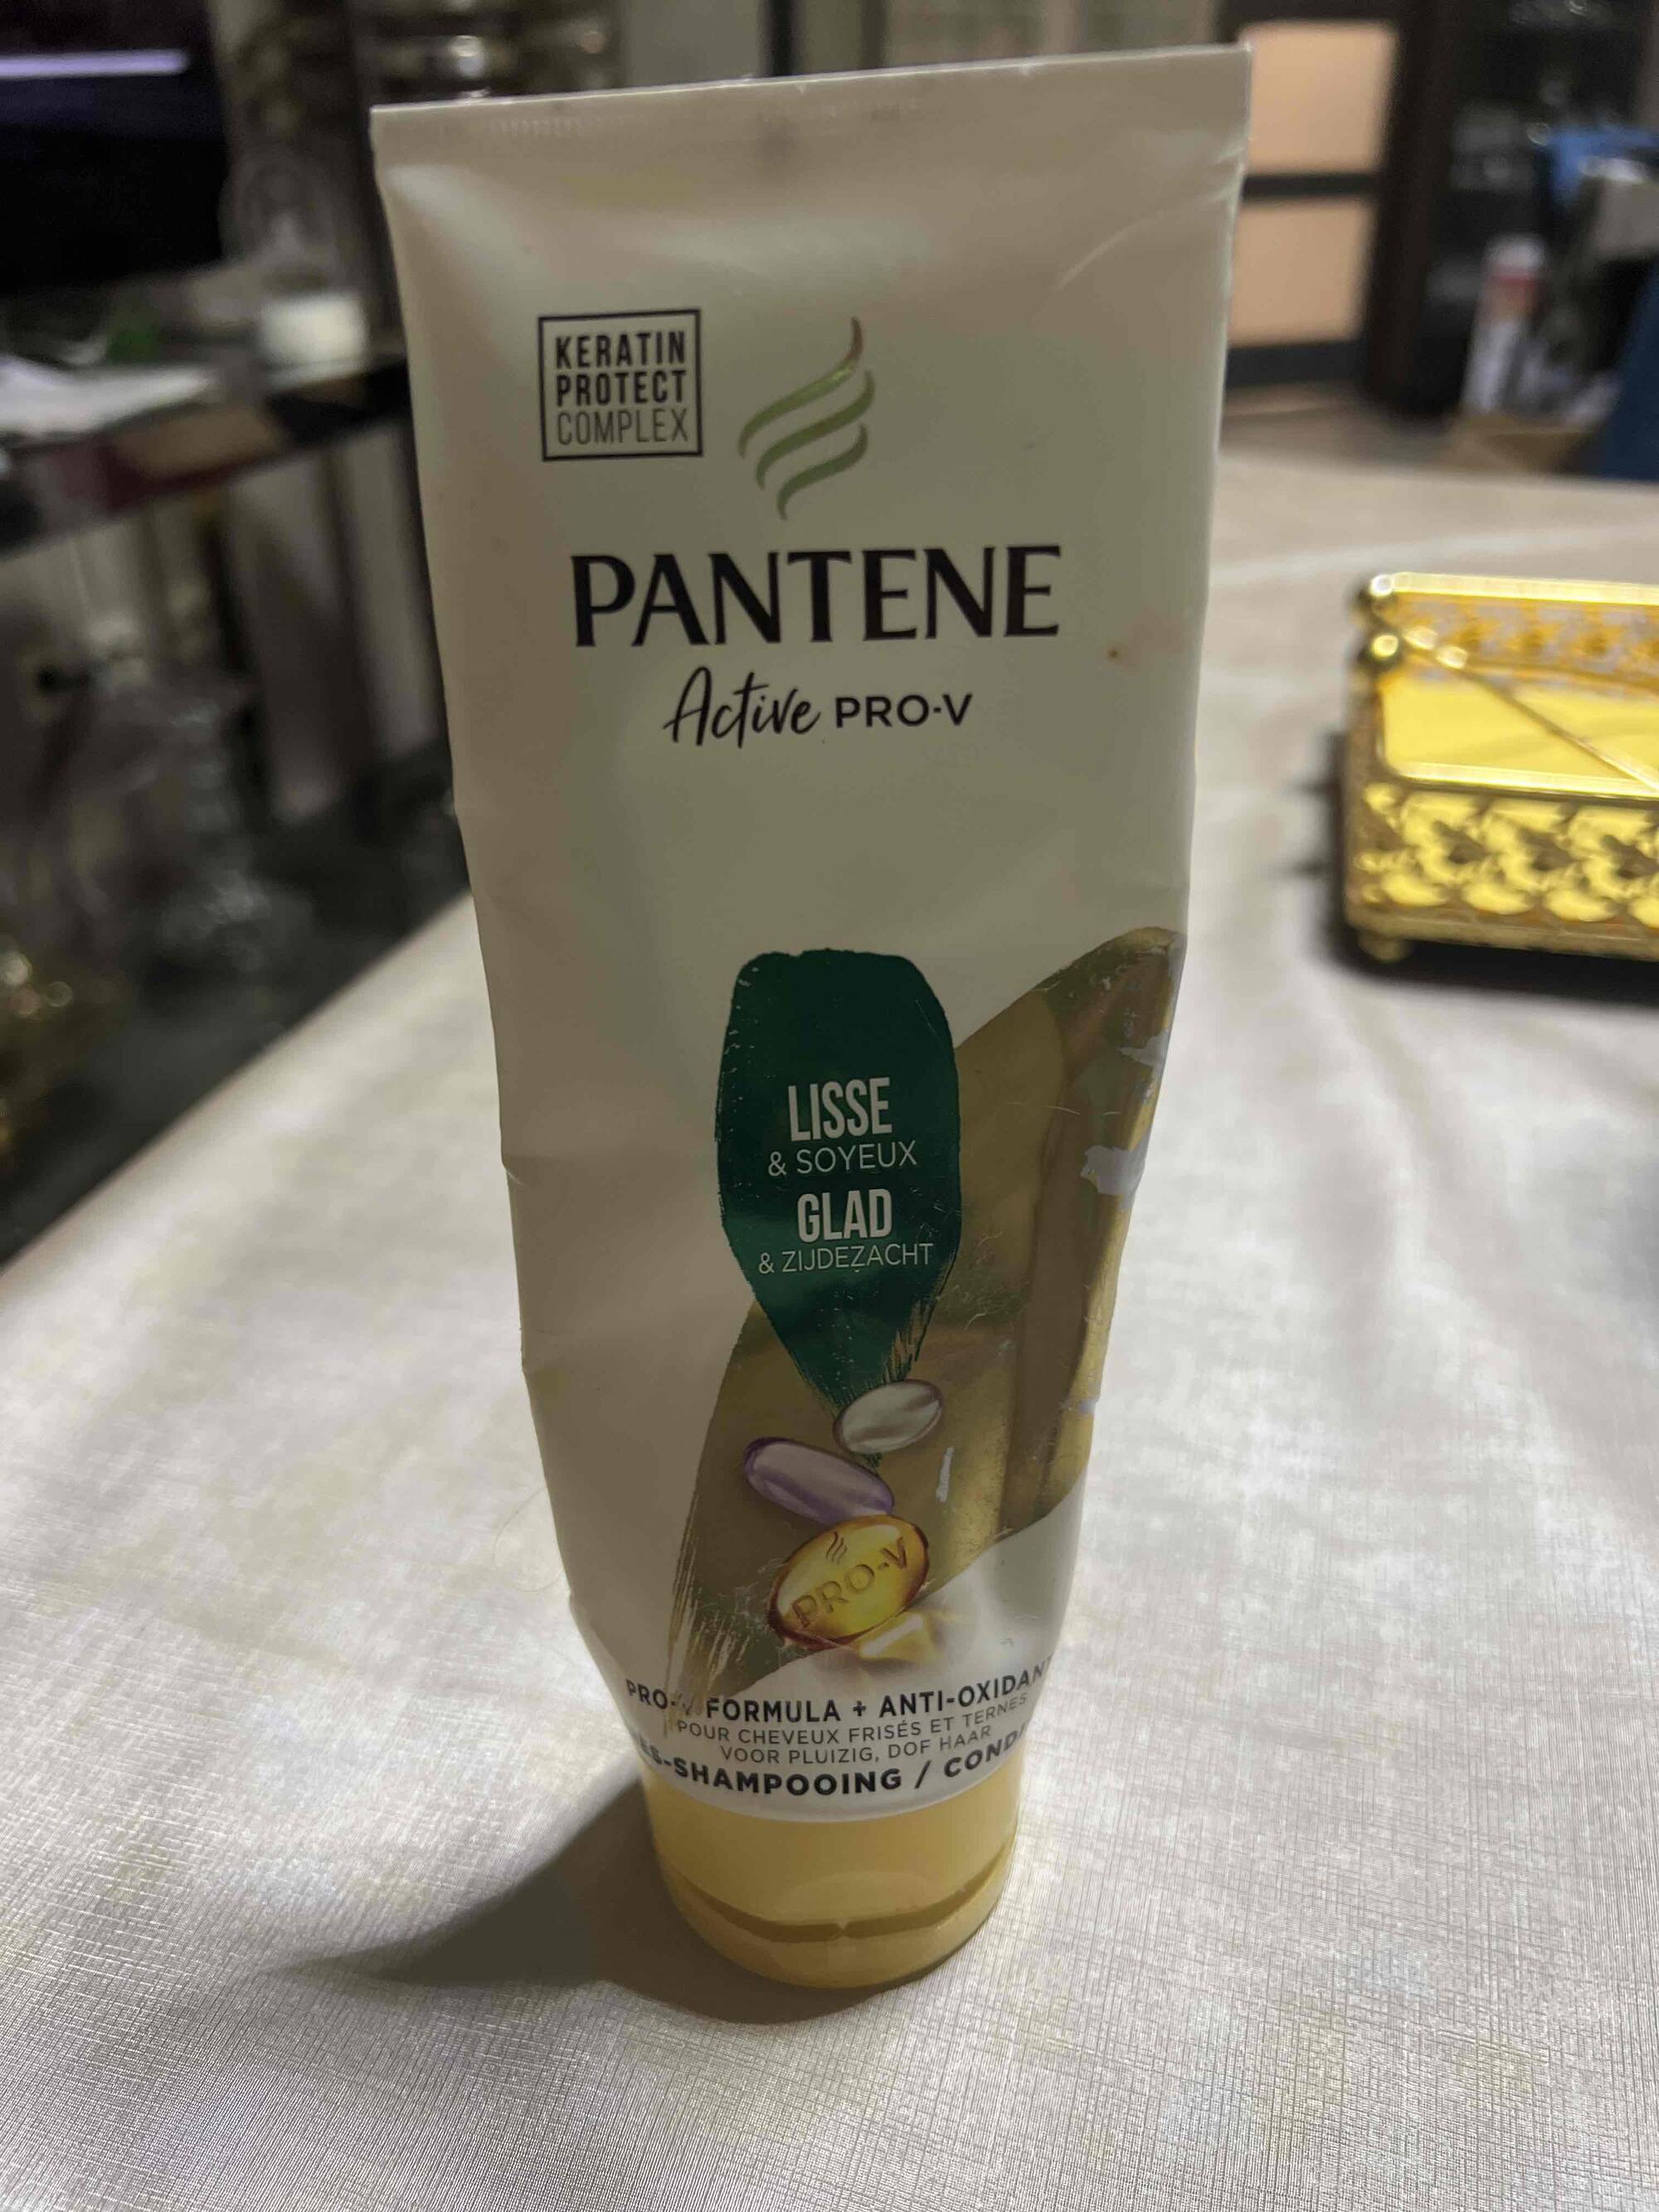 PANTENE - Active pro-v - Après-shampooing